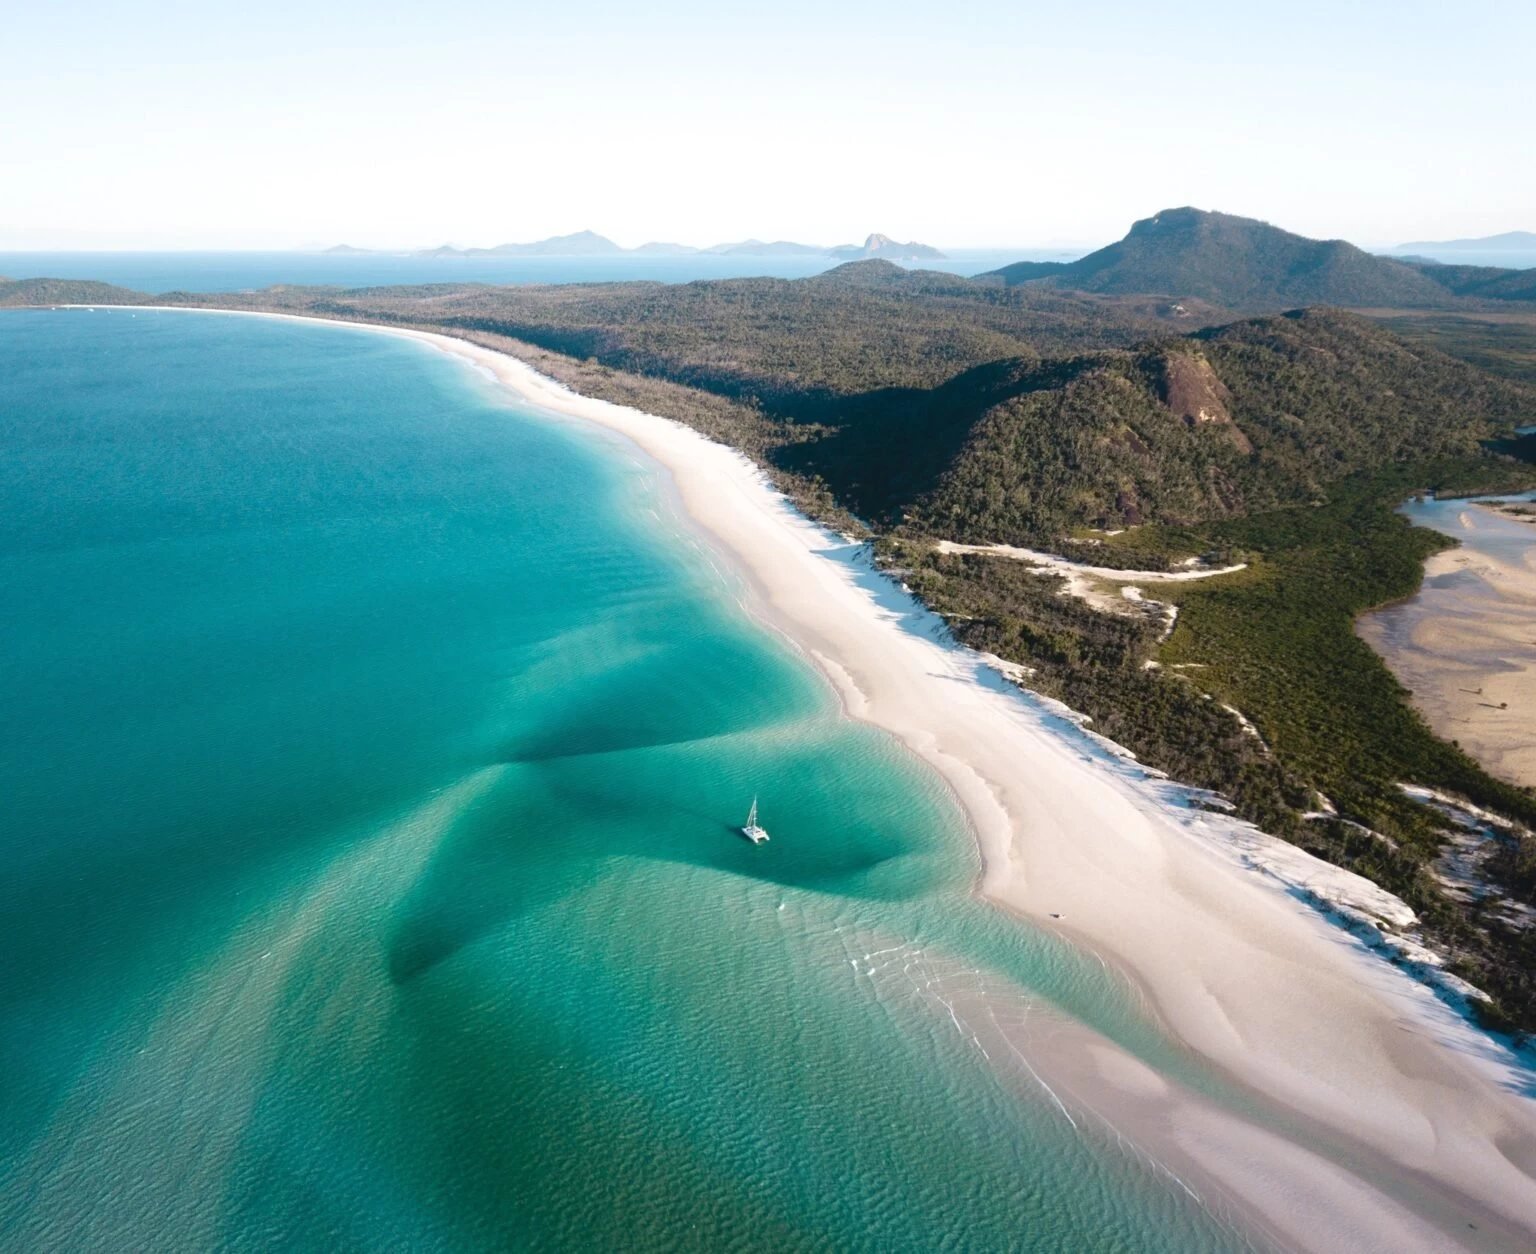 La belleza natural de la playa de Whitehaven en Australia